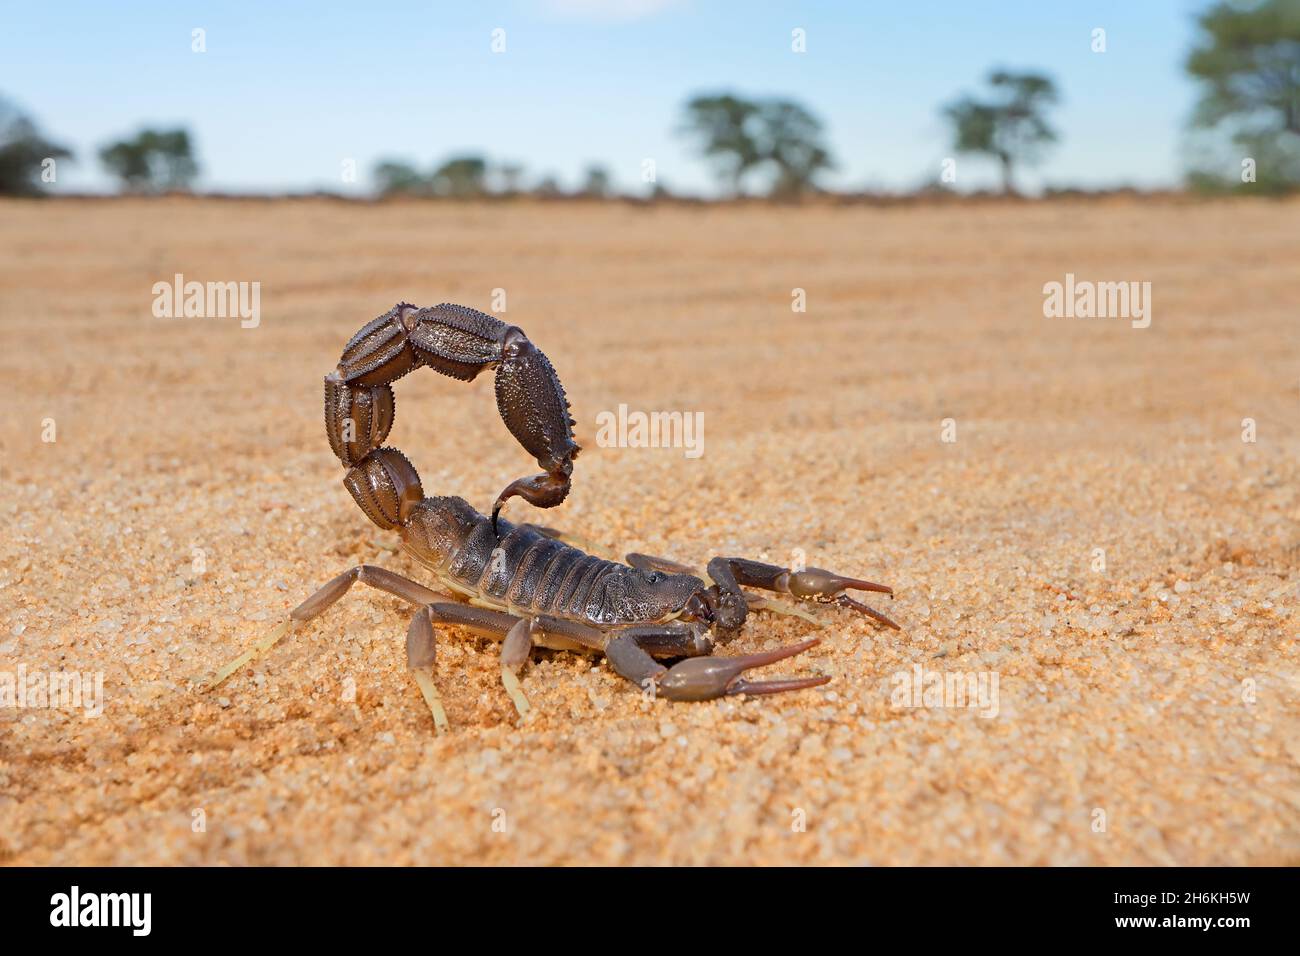 Granulated thick-tailed scorpion (Parabuthus granulatus), Kalahari desert, South Africa Stock Photo